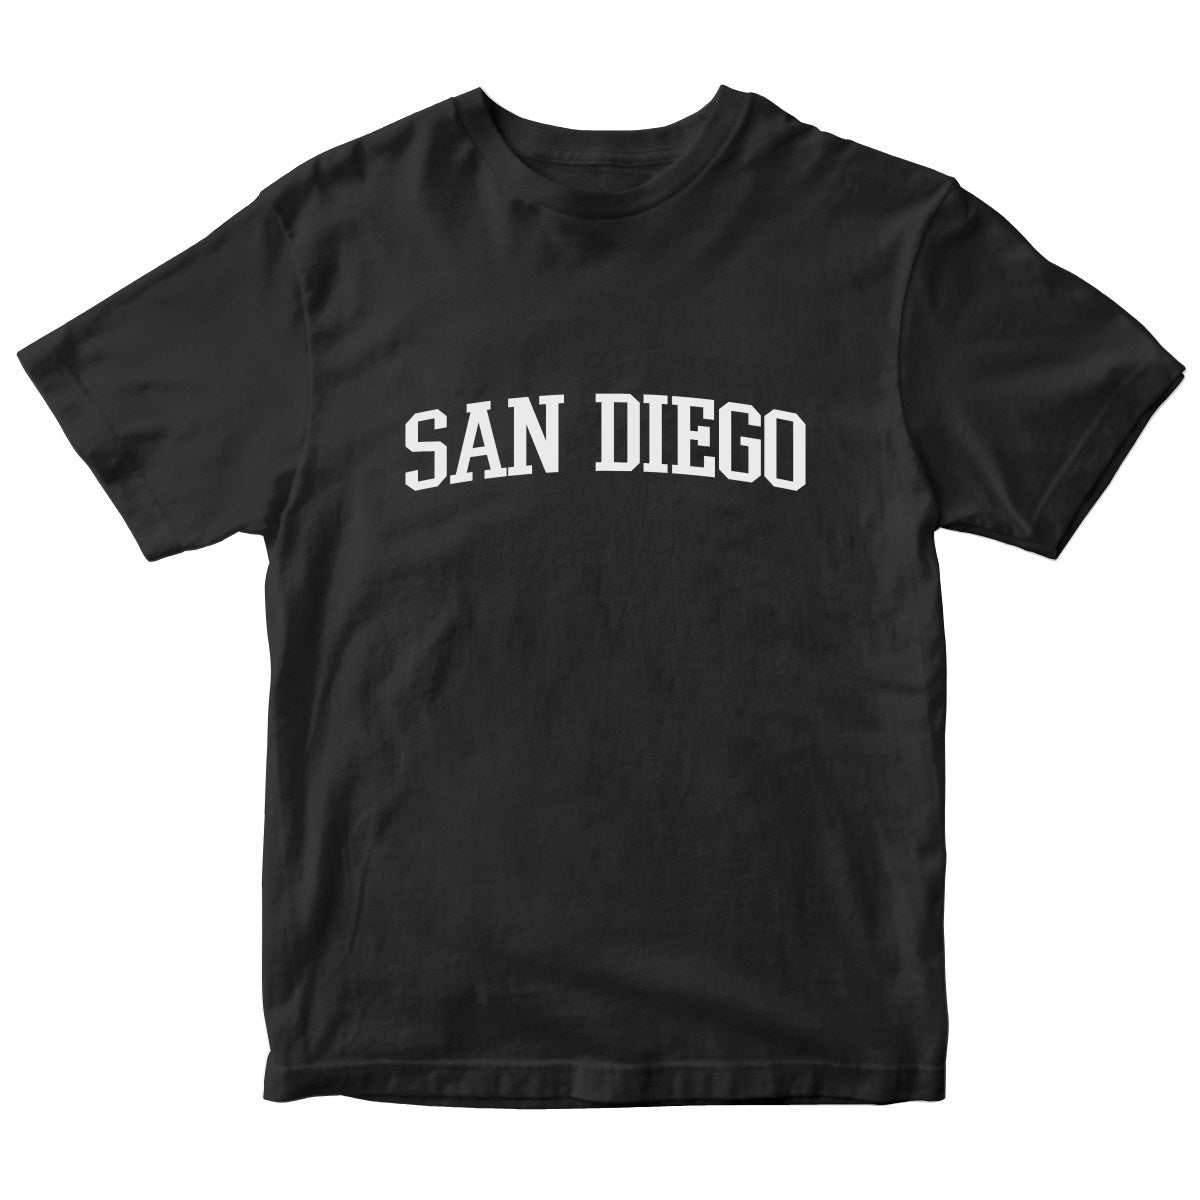 San Diego Kids T-shirt